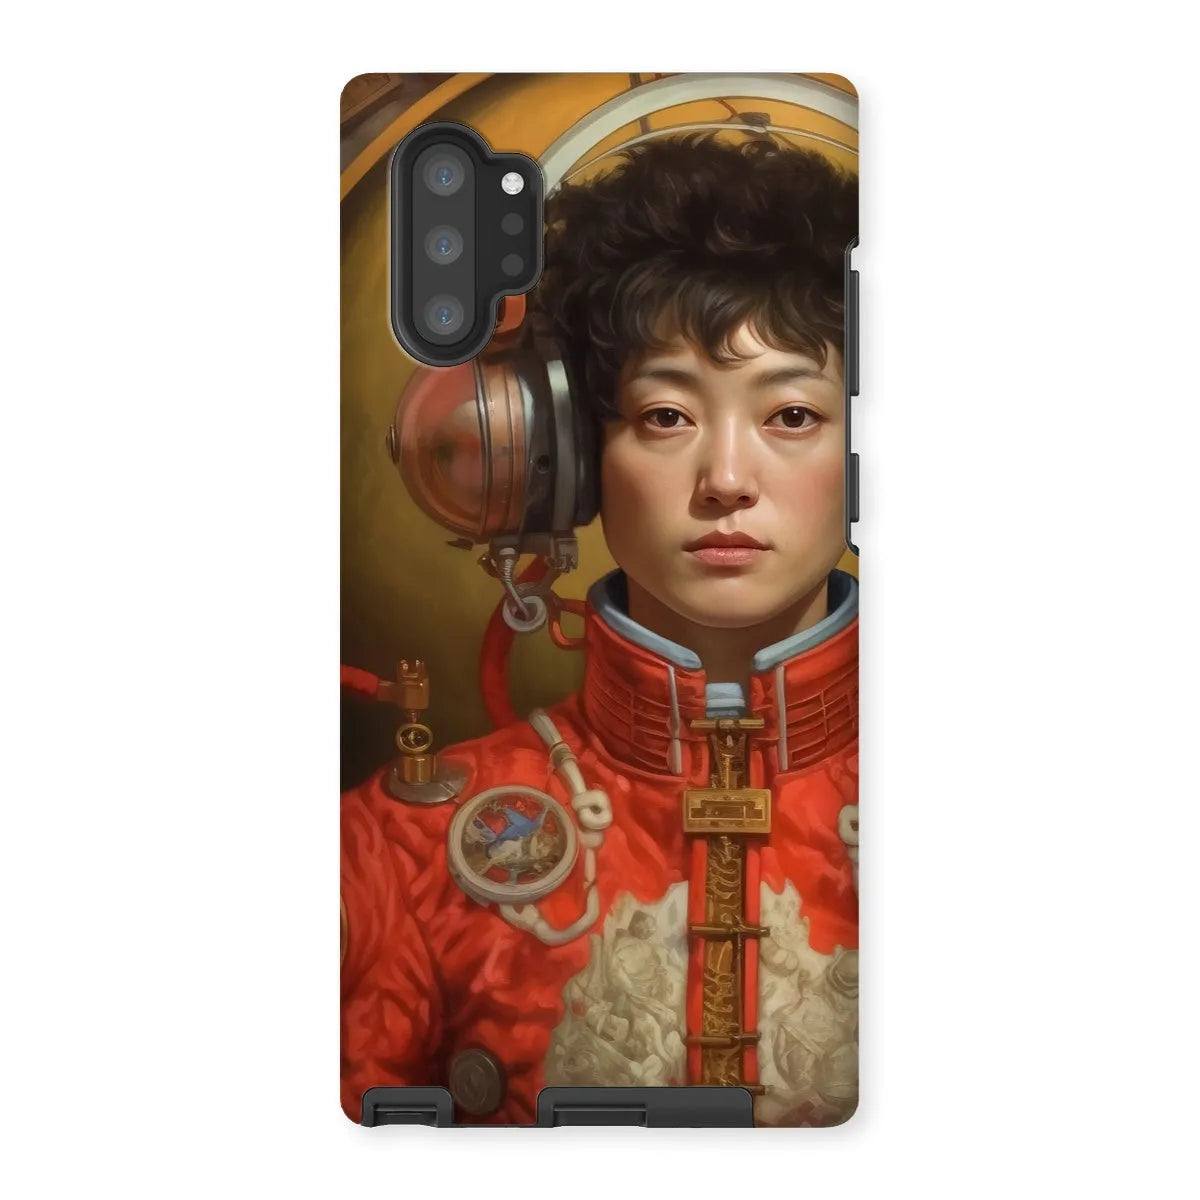 Mùchén The Gay Astronaut - Lgbtq Art Phone Case - Samsung Galaxy Note 10p / Matte - Mobile Phone Cases - Aesthetic Art